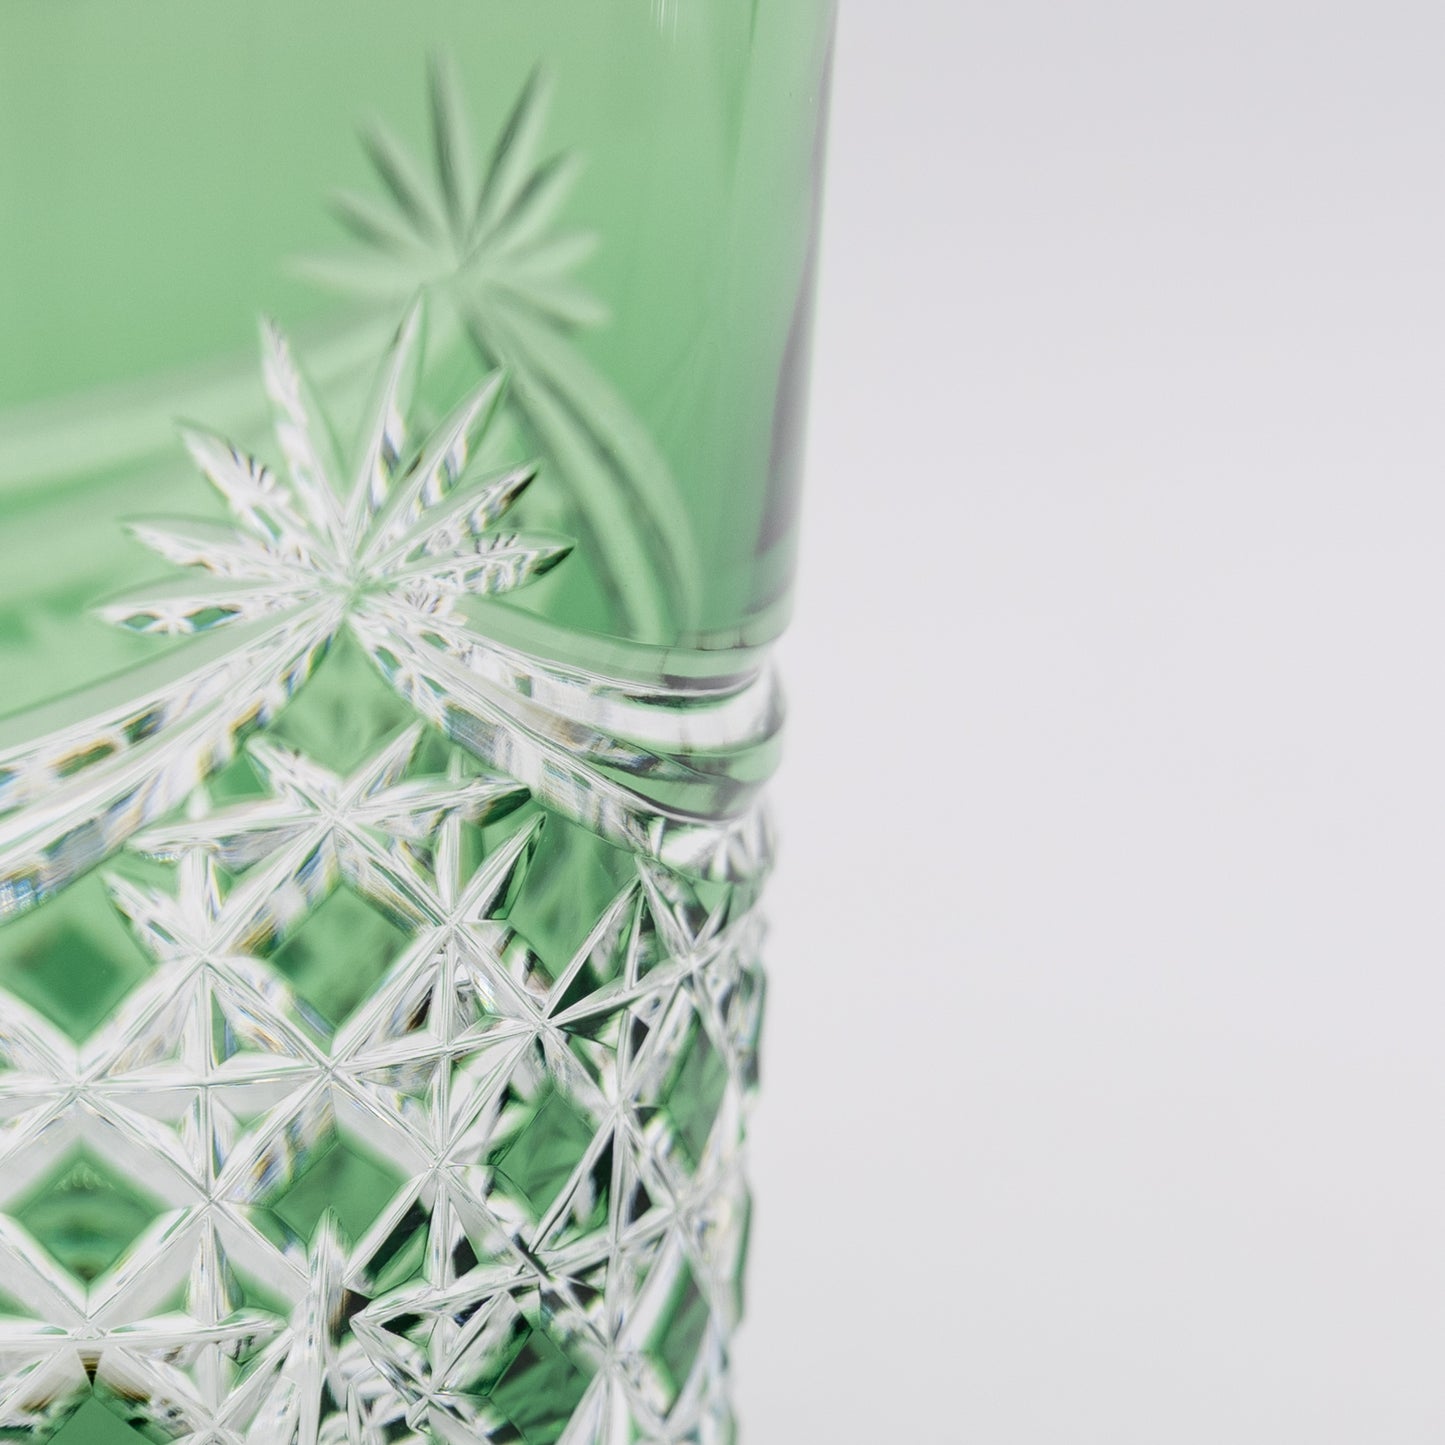 Kagami Crystal - Whiskey Glass - Drape & Tetragonal Basket Weave